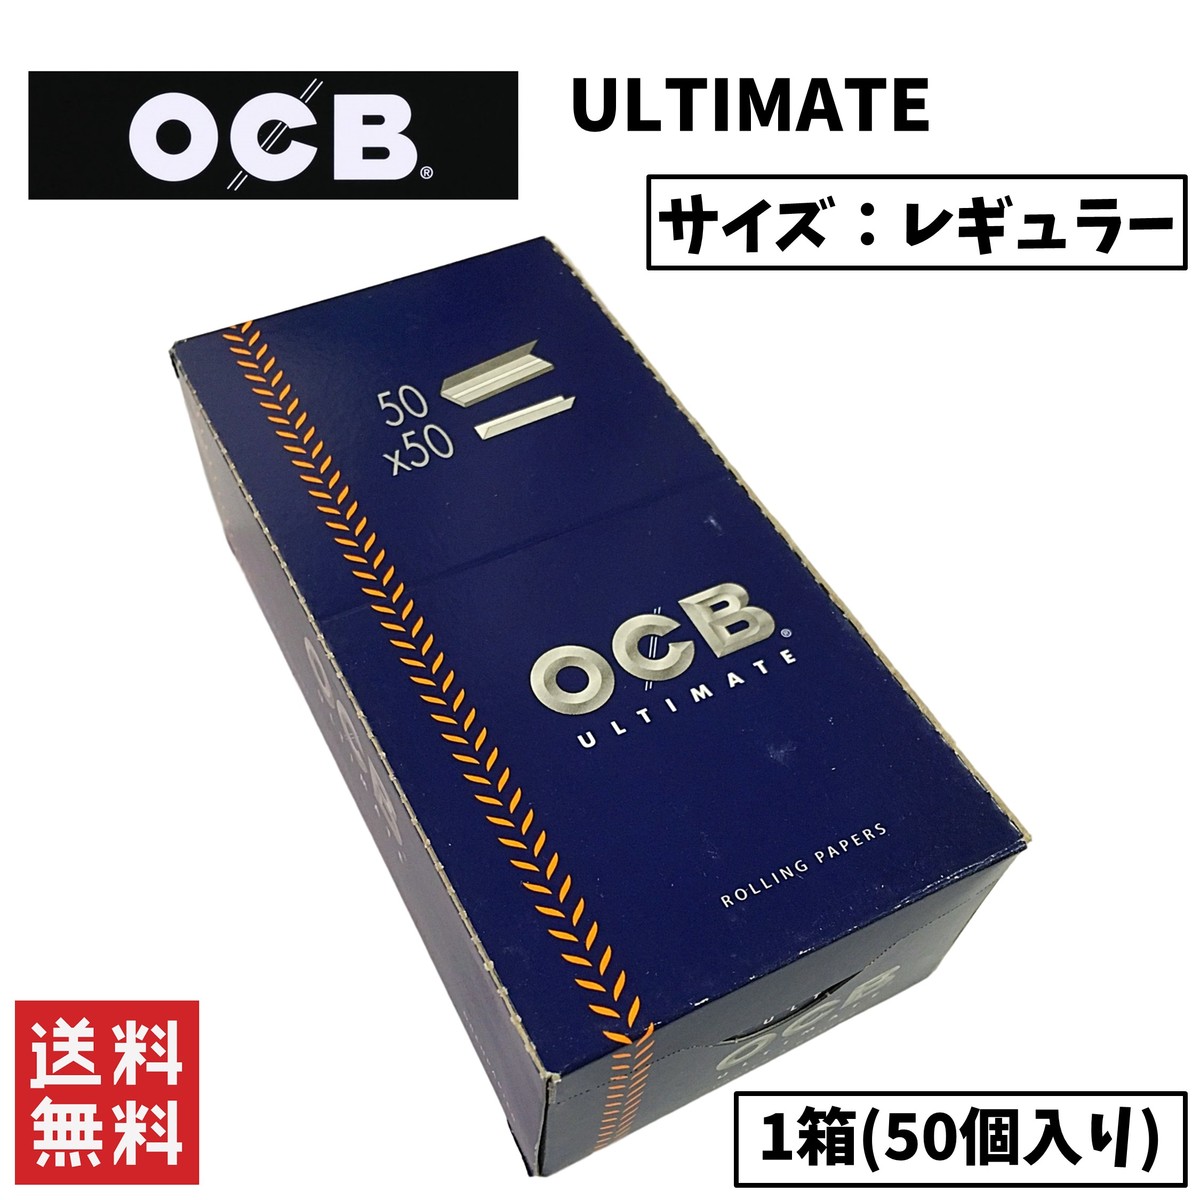 OCB ULTIMATE アルティメイト ペーパー 1箱 50個入り 喫煙具 手巻きたばこ ペーパー